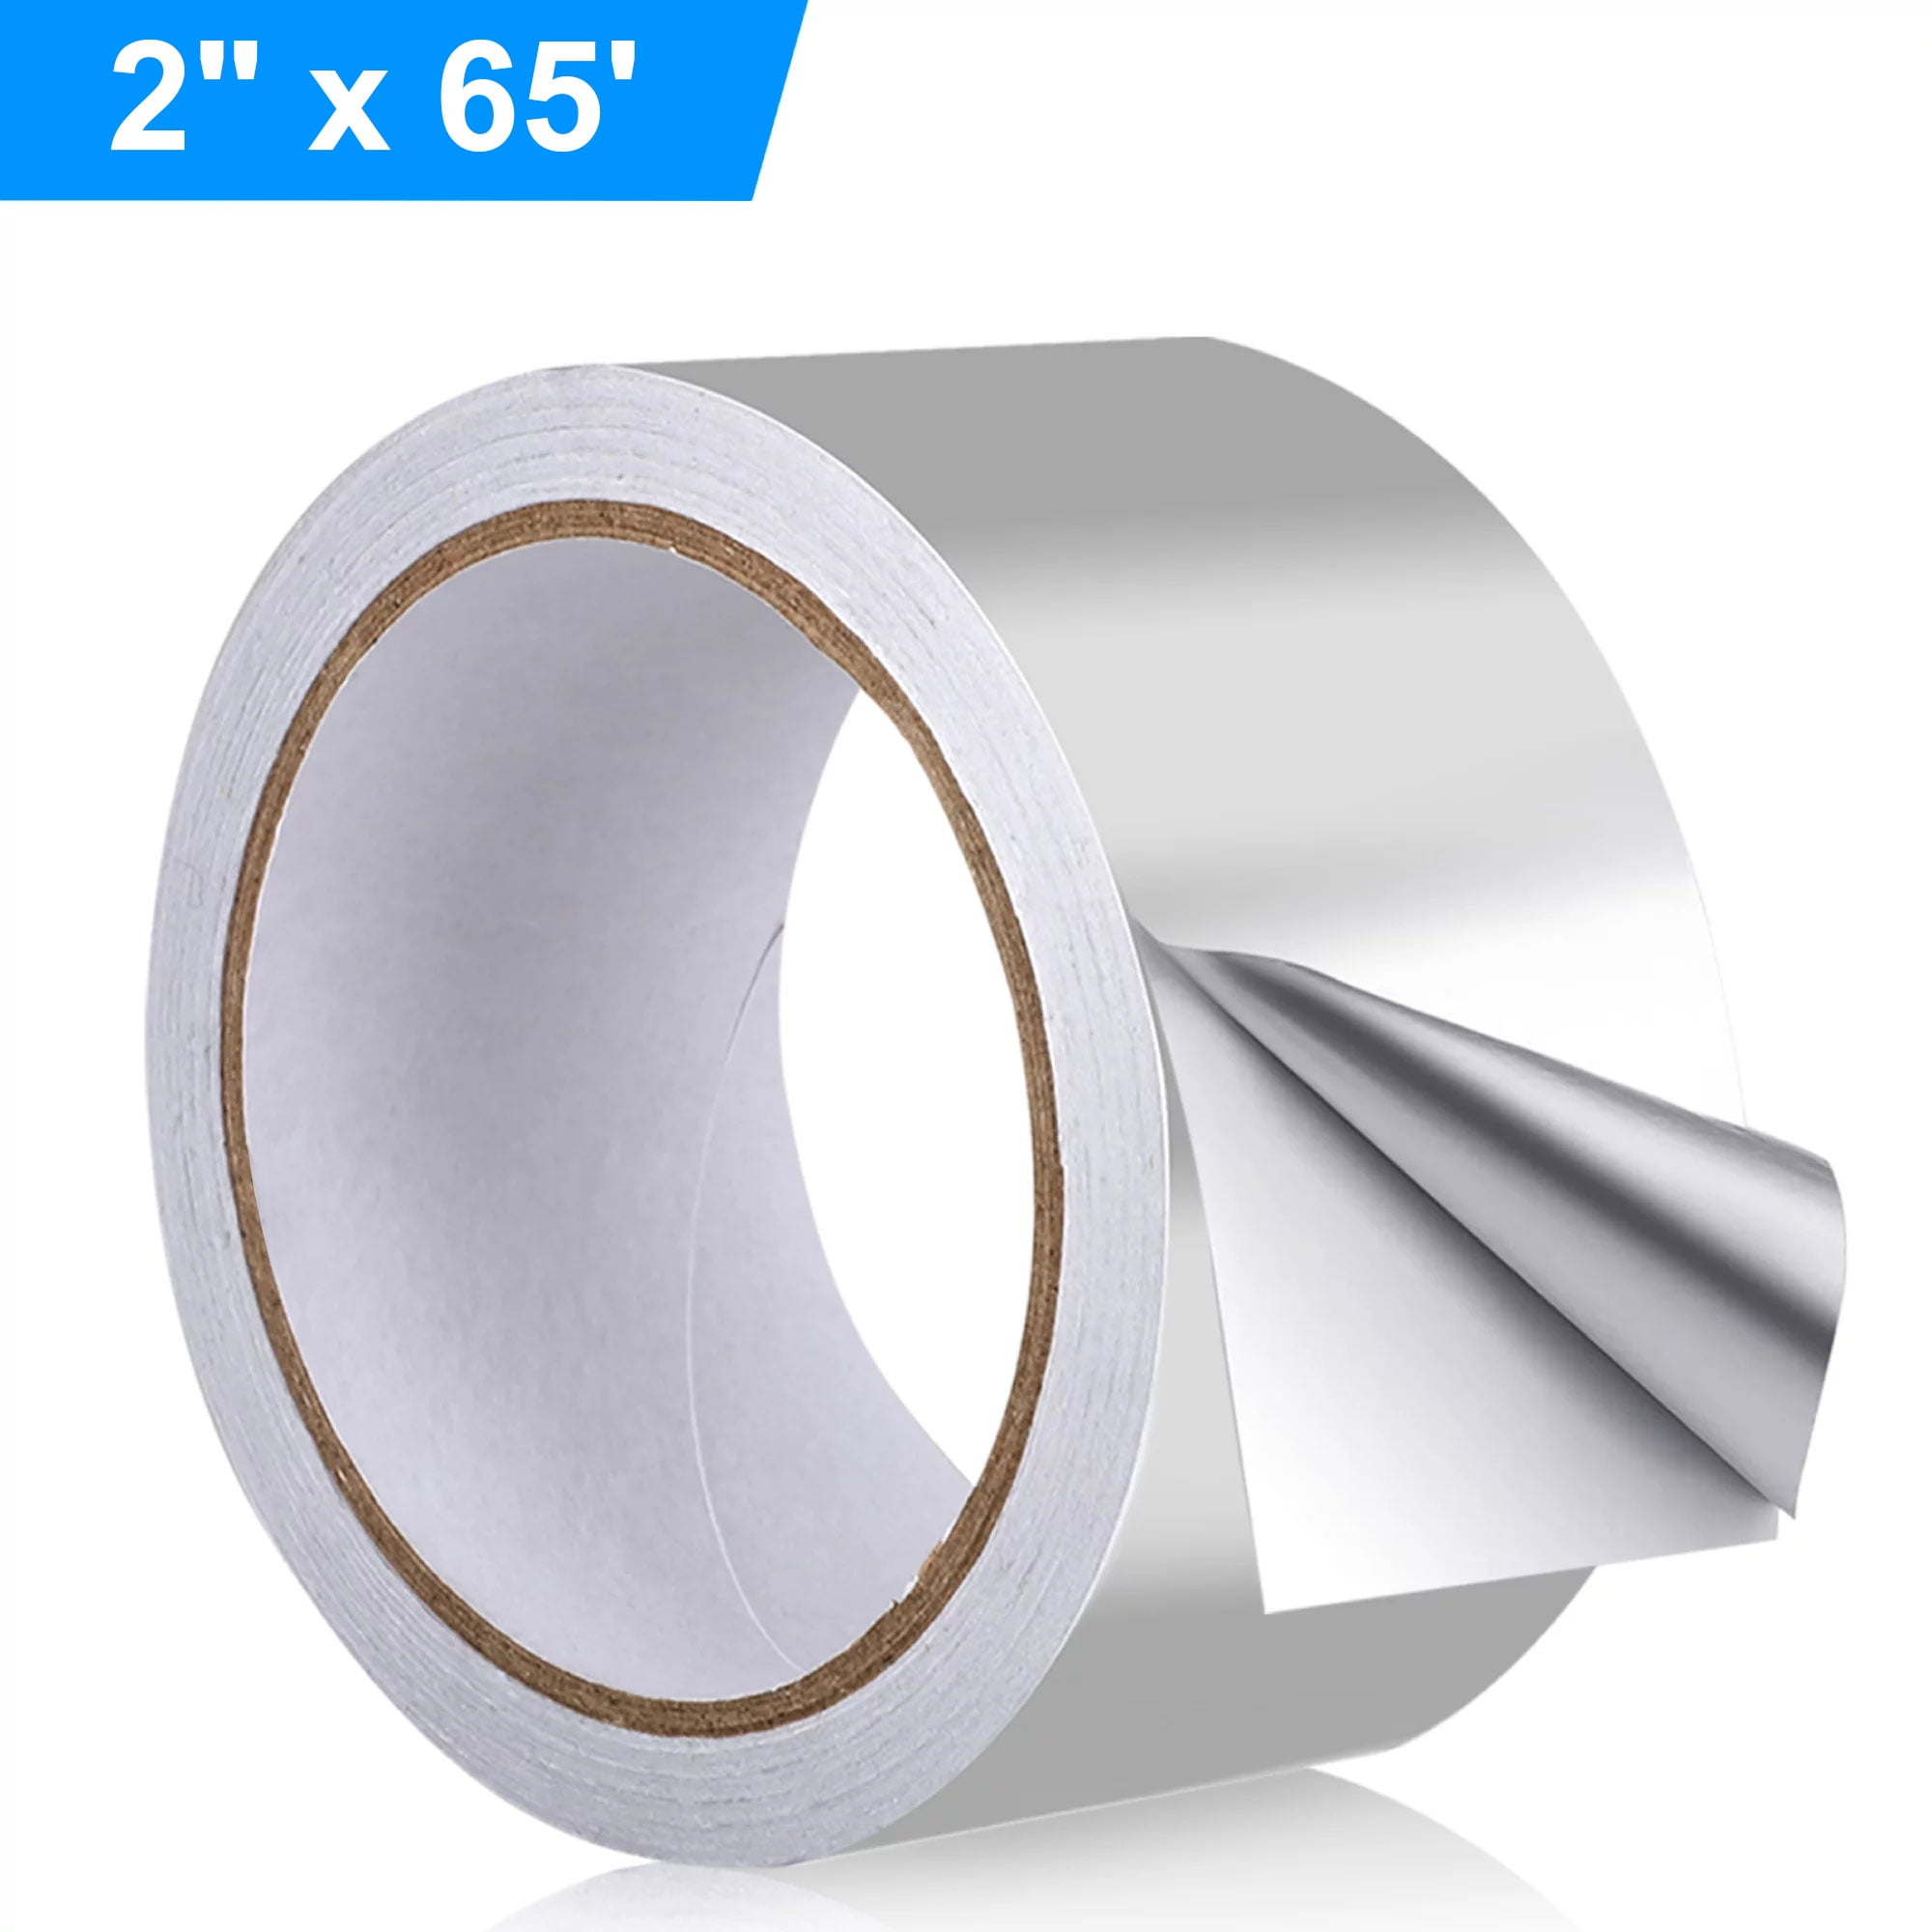 50-1pcs Ultra Thin Nylon Repair Tape Strong Adhesive Cloth Tape